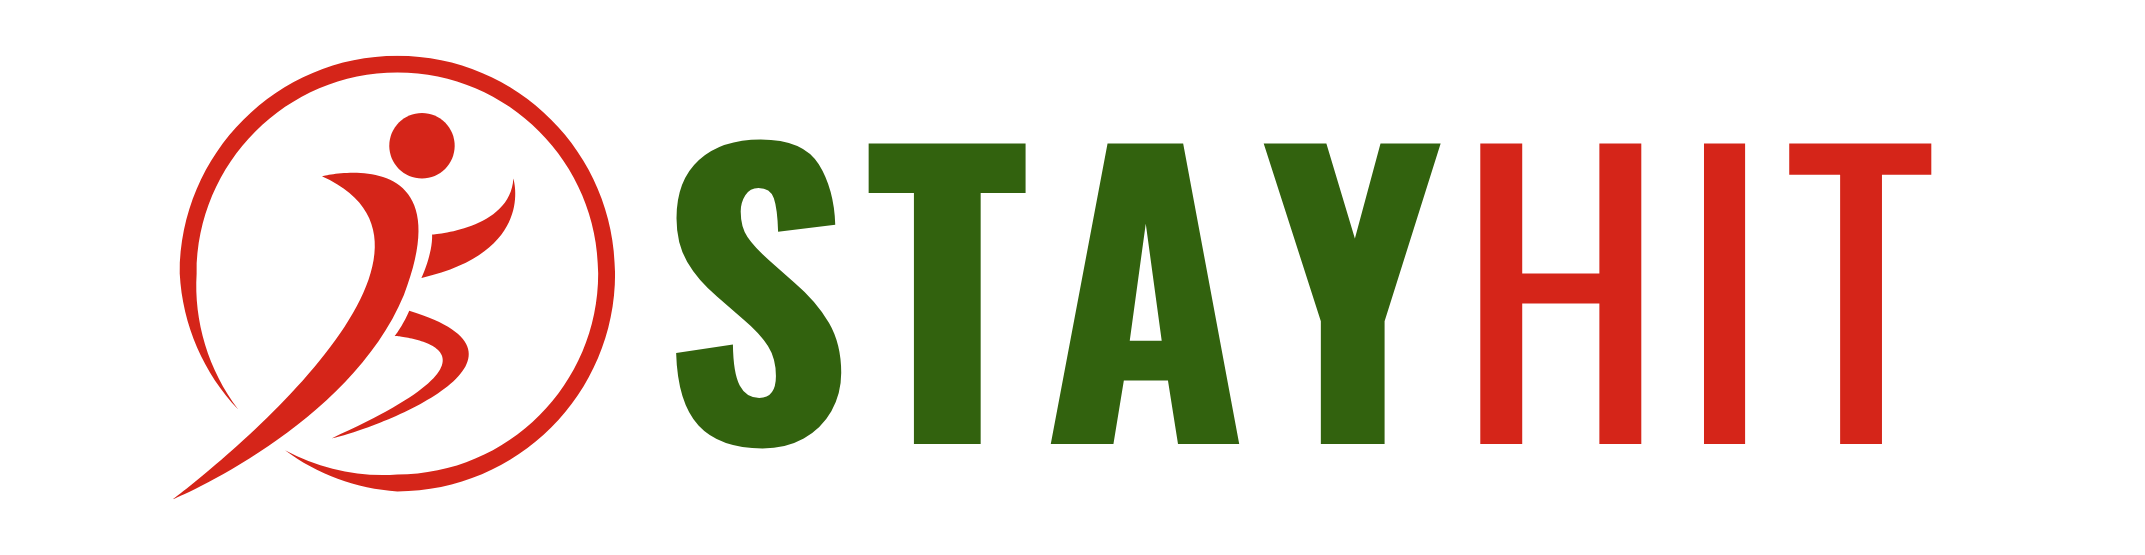 StayHit - StayFit